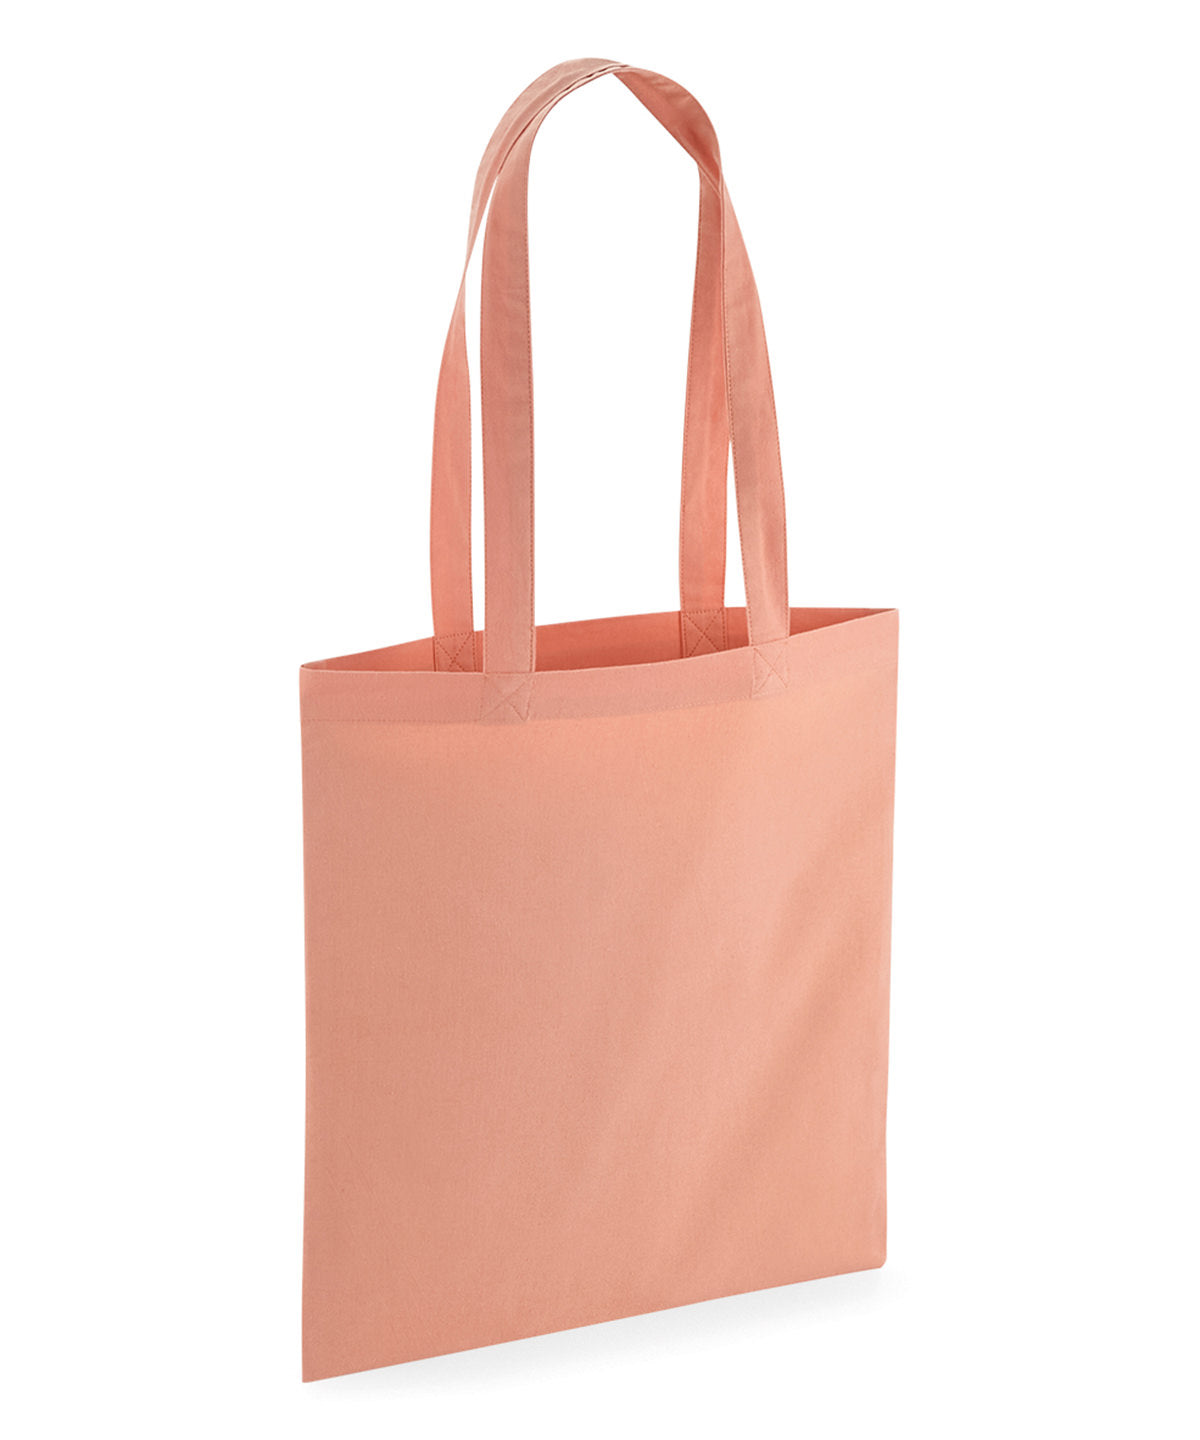 Töskur - Organic Natural Dyed Bag For Life